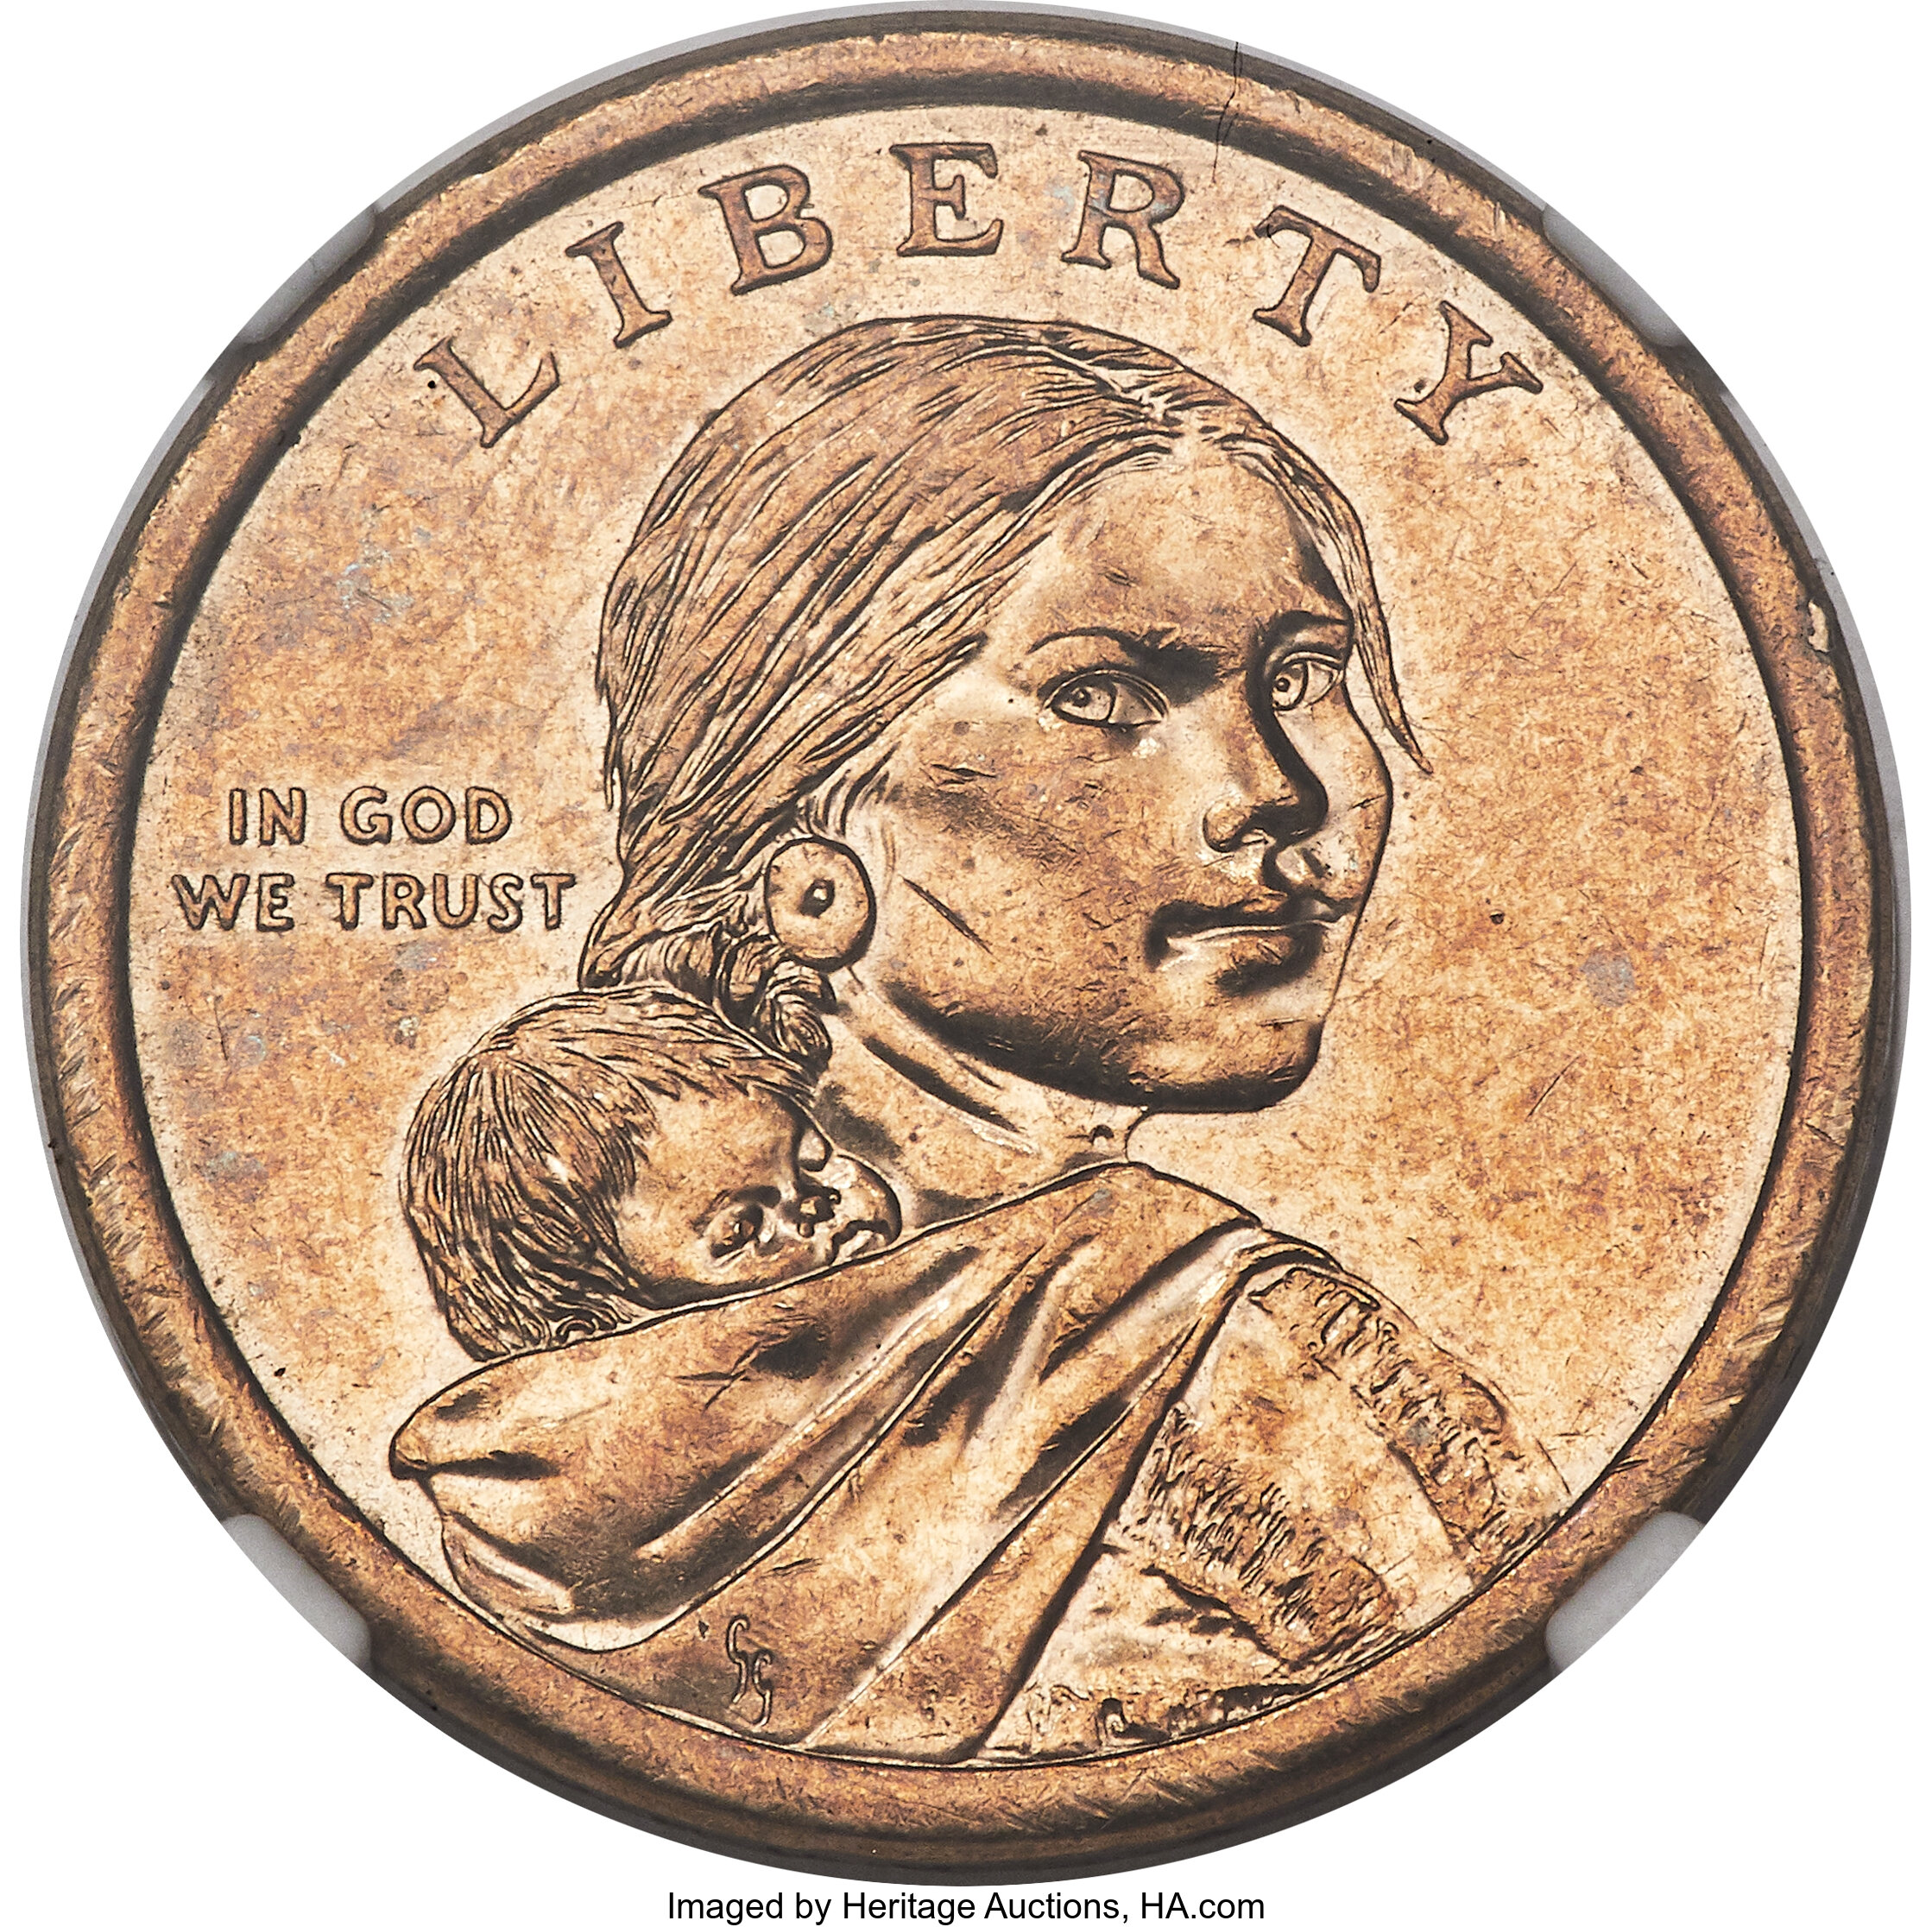 1 доллар сакагавея. Монета 1 доллар США. Монеты США Сакагавея парящий Орел. Американский доллар монета.